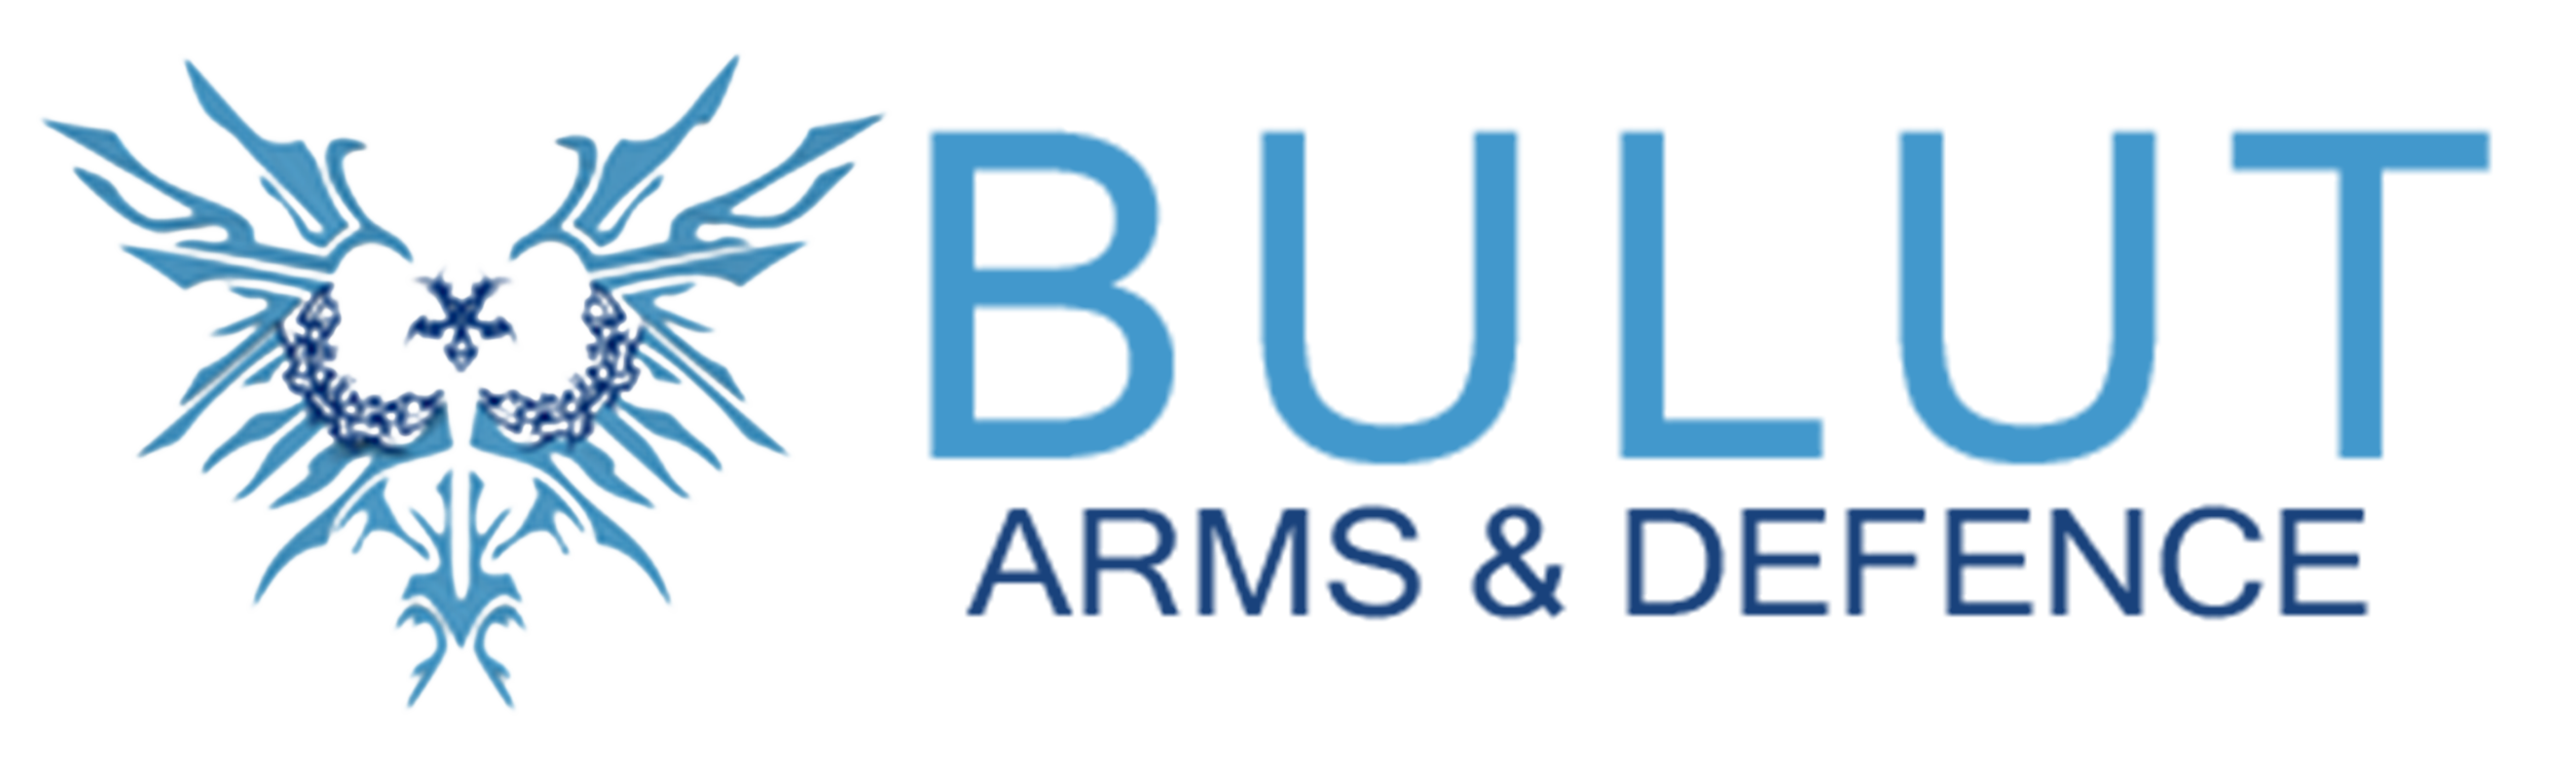 BULUT ARMS & DEFENCE